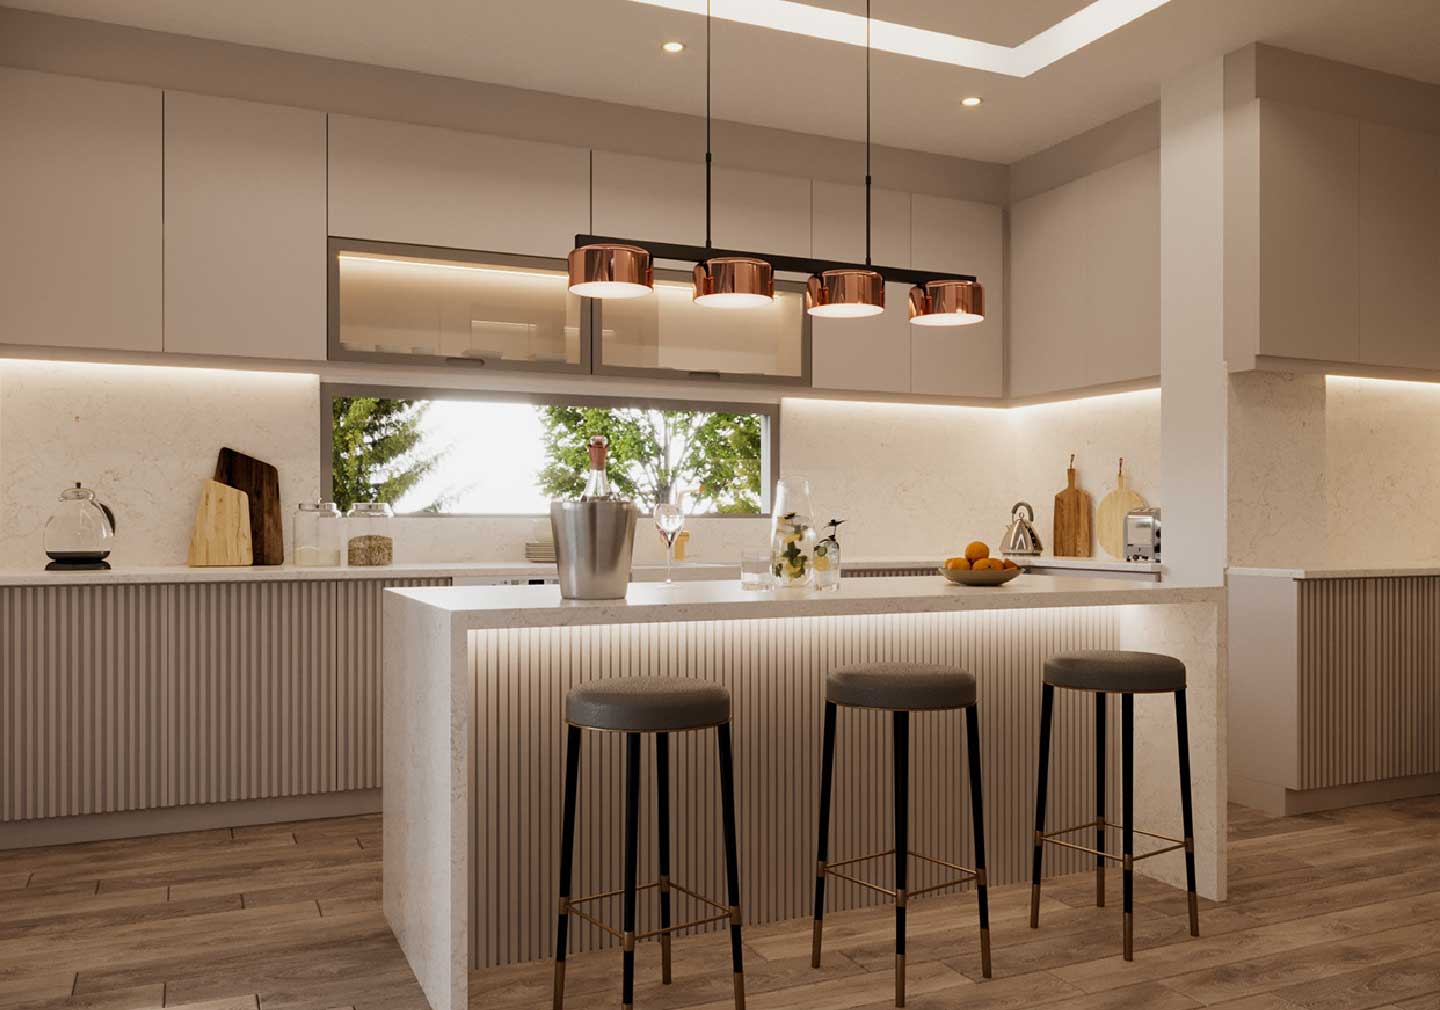 Customization and Aesthetics: for modular kitchen designs